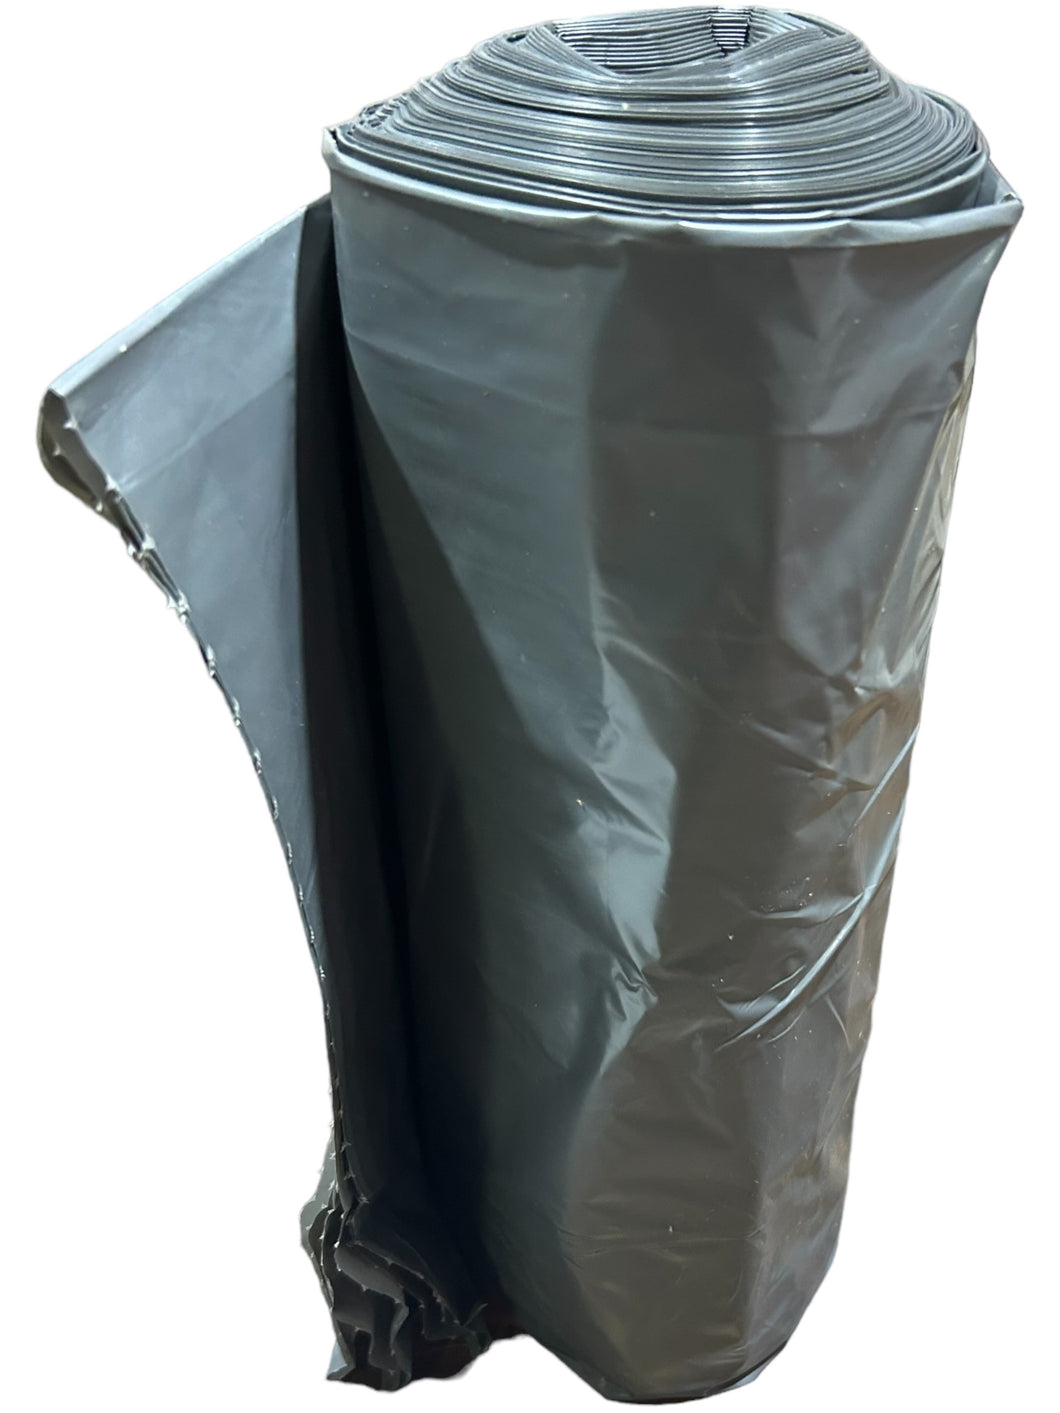 TOUGH GUY Trash Bags, 4YPC2, 60 gal Capacity, 38 in Wd, 58 in Ht, 1.5 mil Thick, Gray, 100 PK - FreemanLiquidators - [product_description]